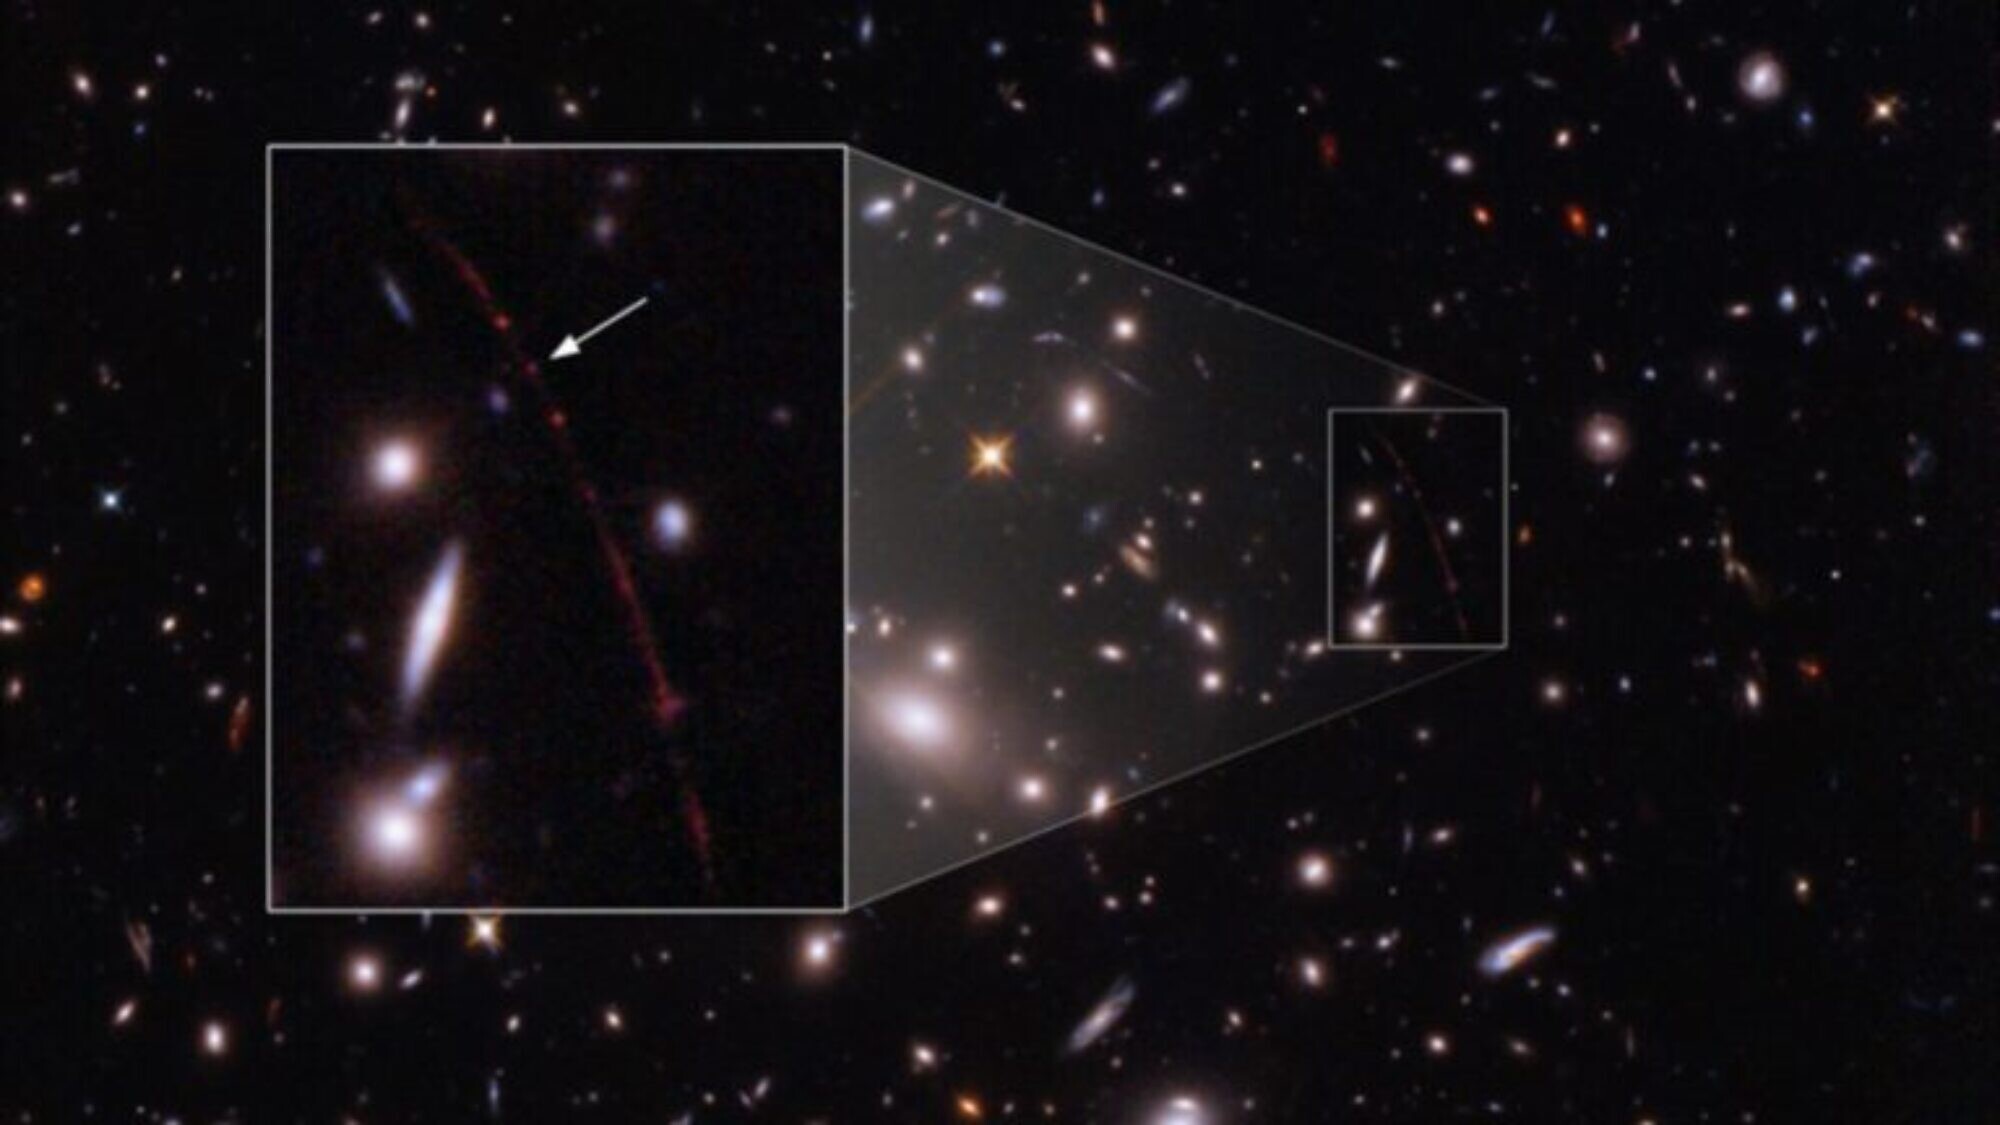 Hubble spots farthest star ever seen